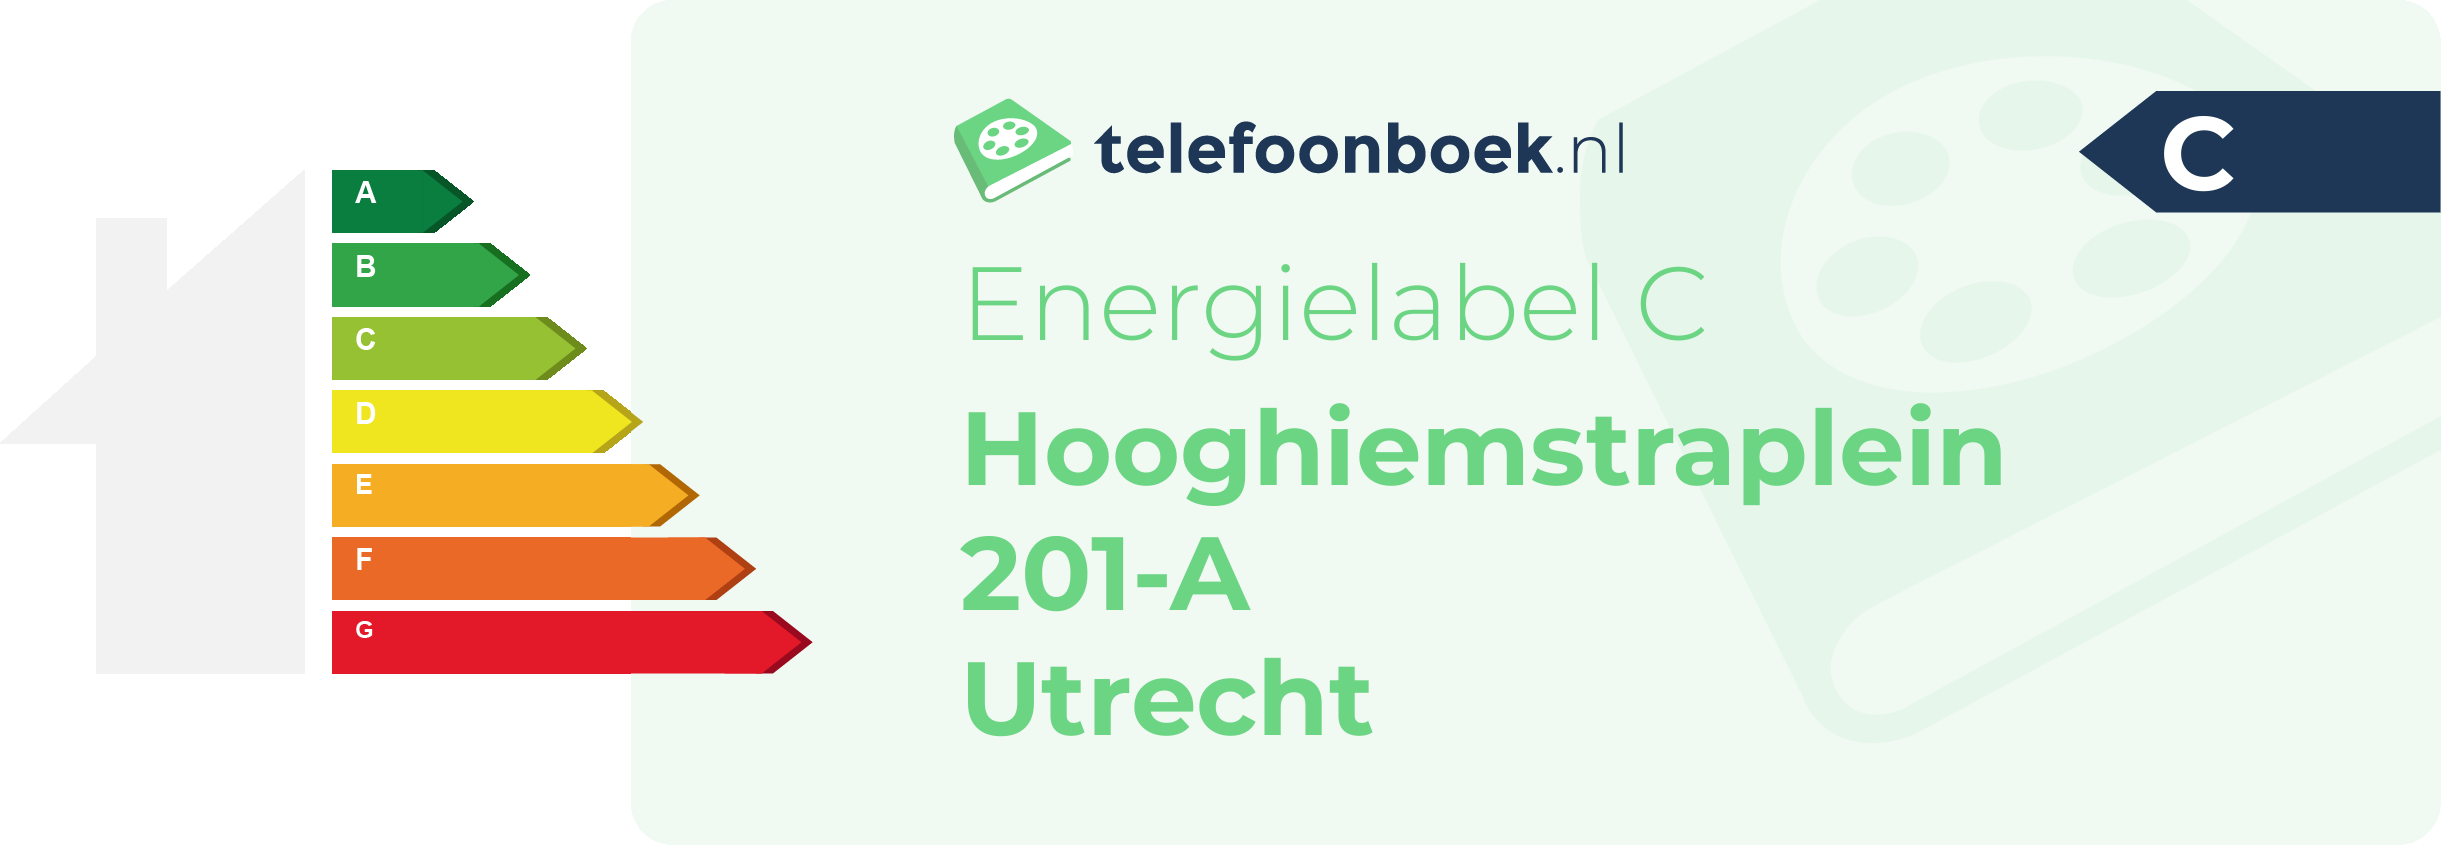 Energielabel Hooghiemstraplein 201-A Utrecht